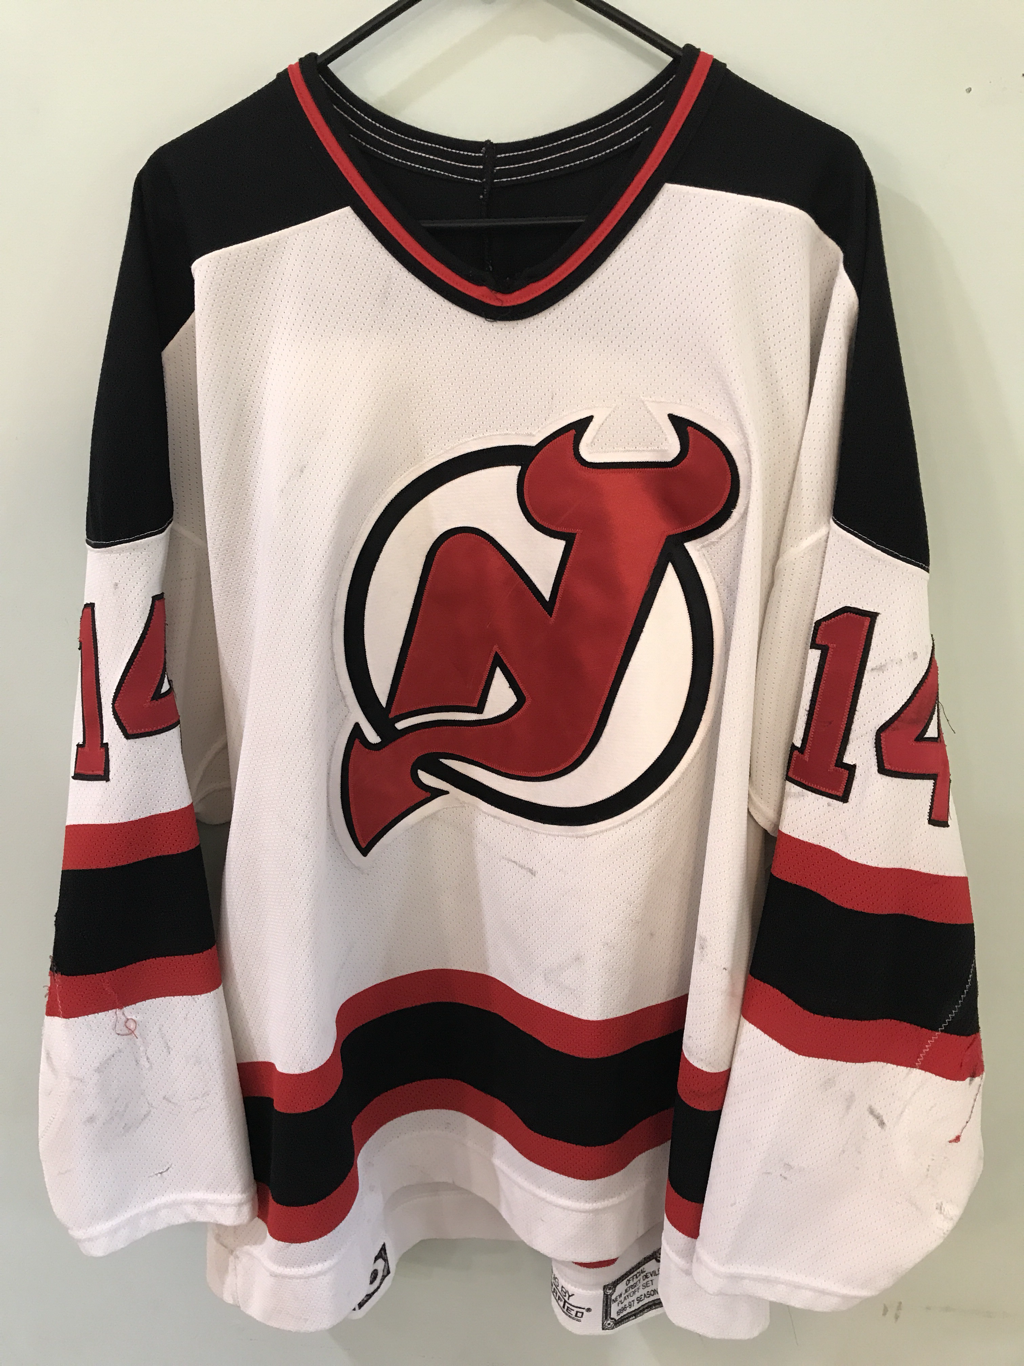 JOHN MacLEAN New Jersey Devils 1988 CCM Vintage Throwback NHL